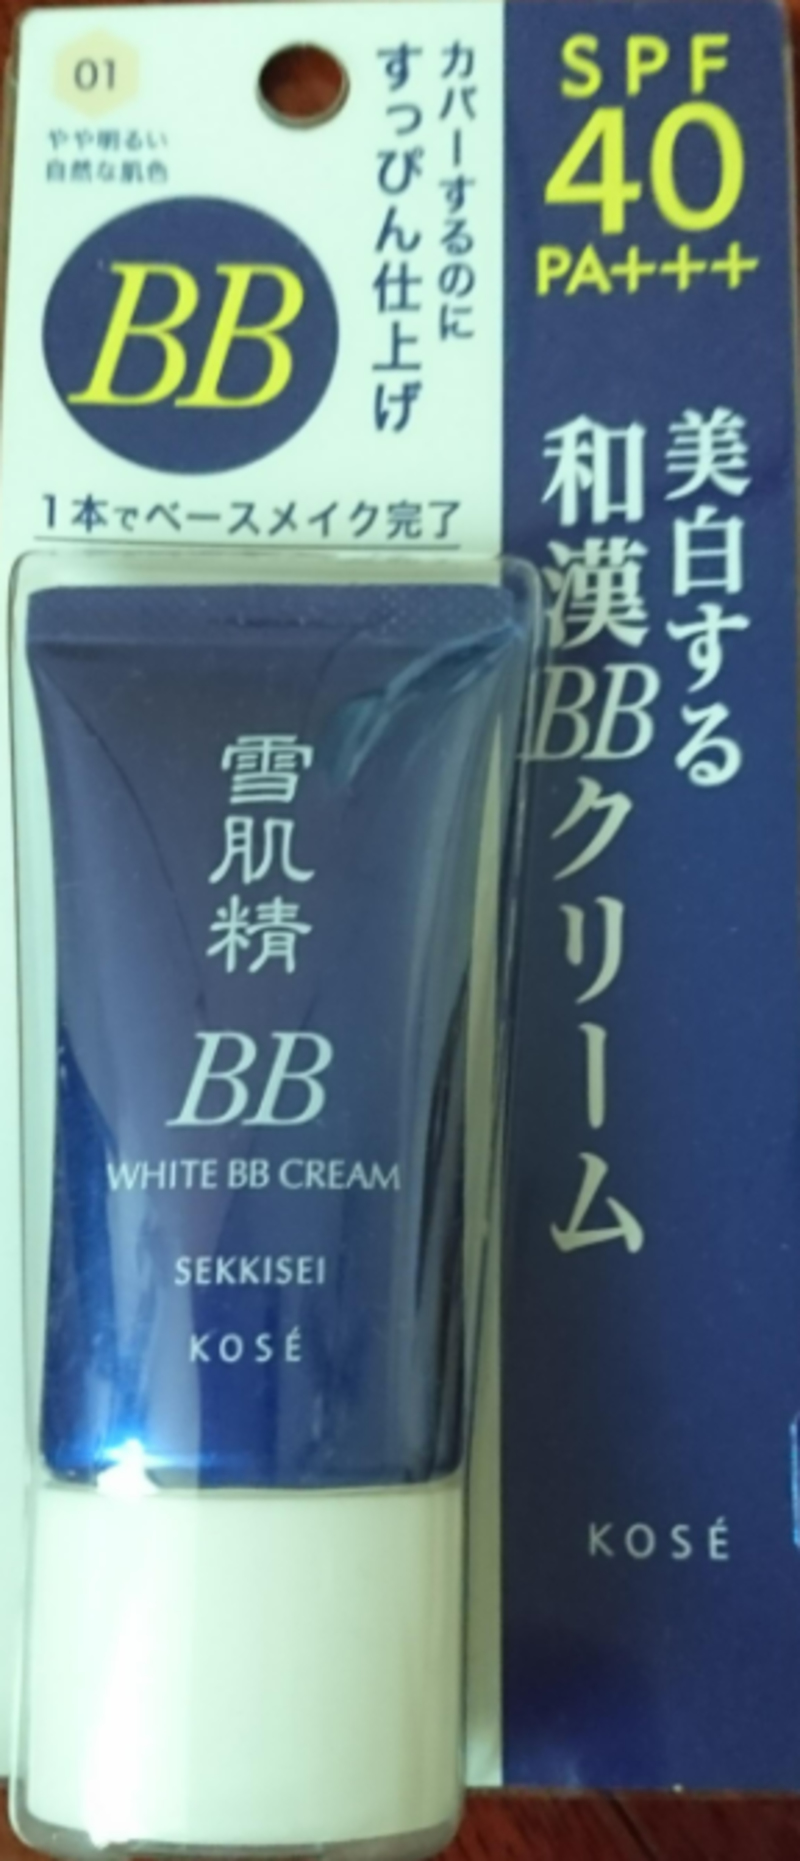 BB Creams | imgur.com/asbeel